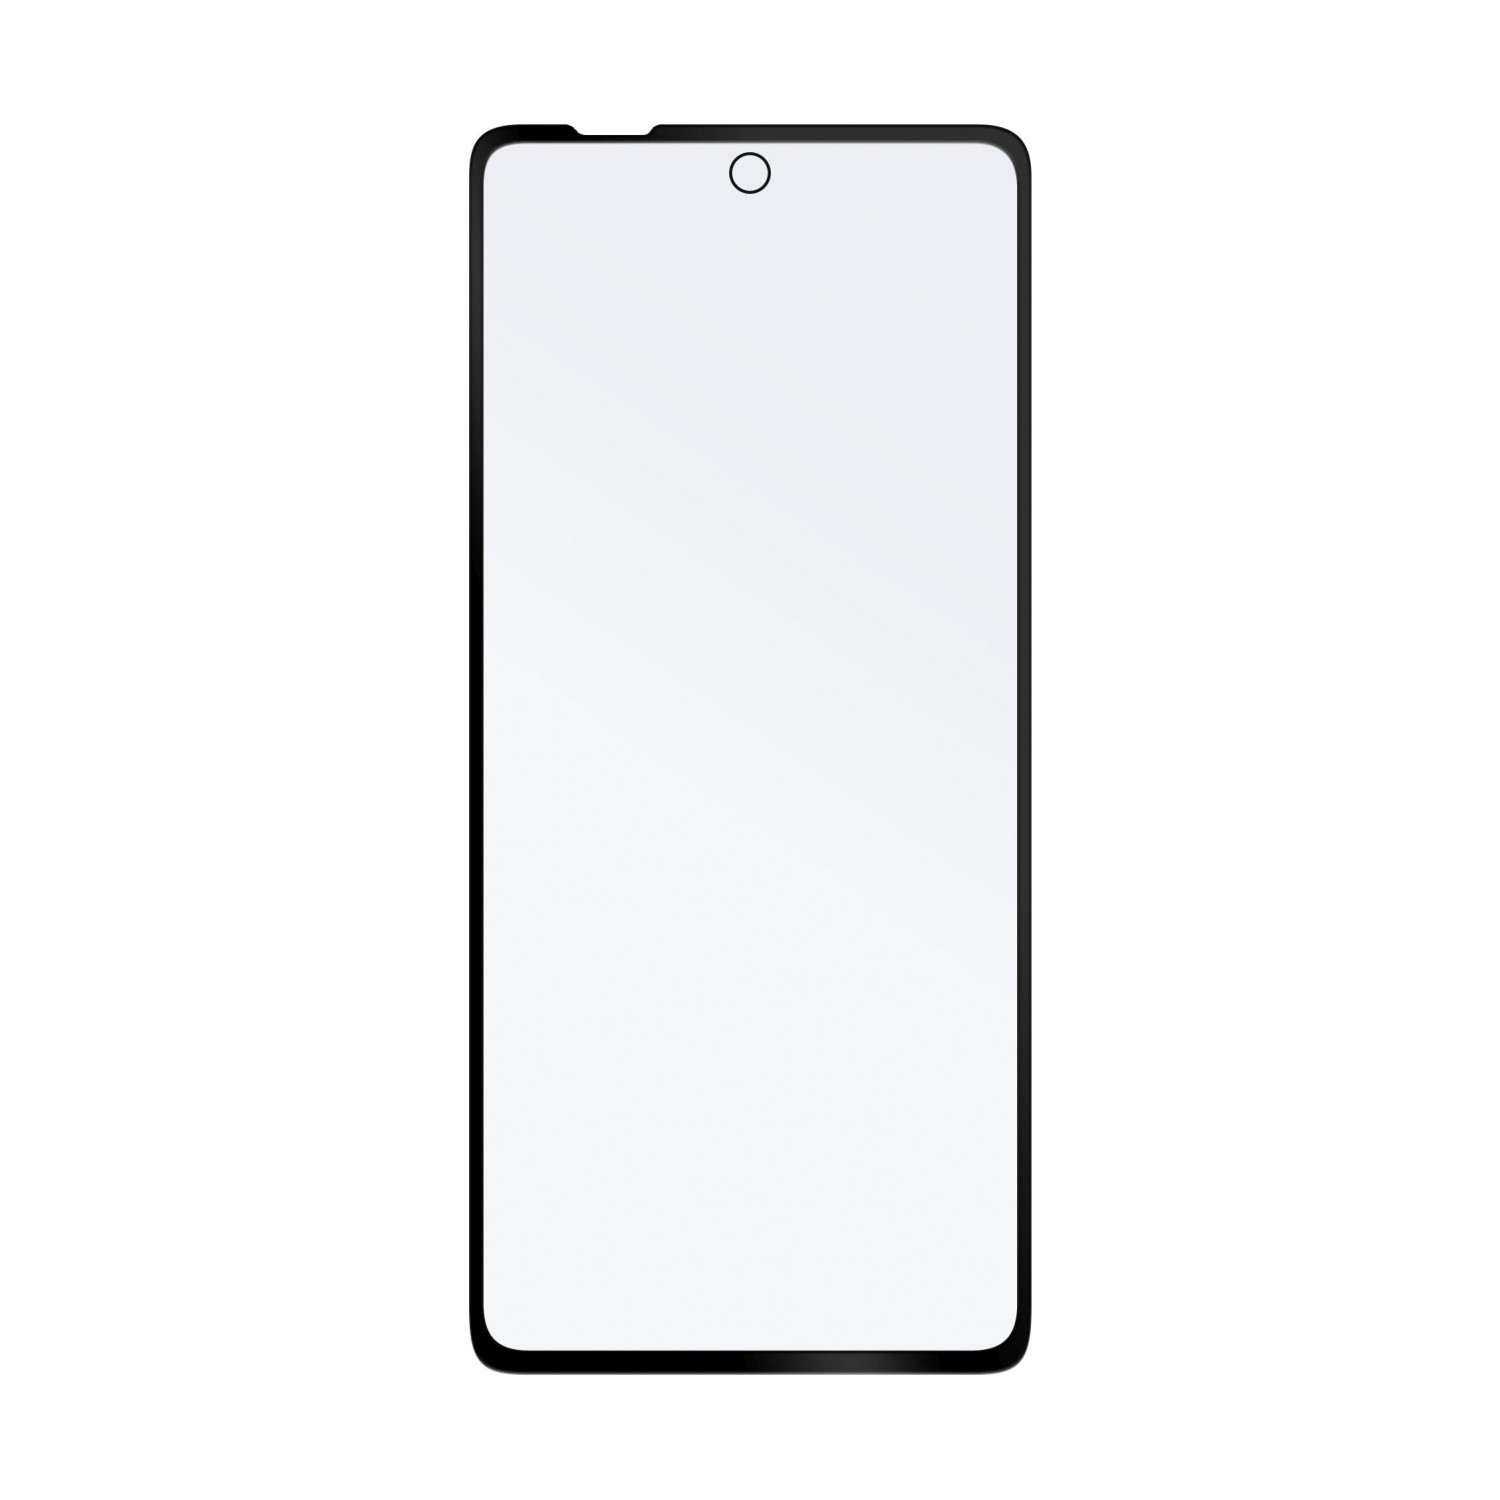 Tvrzené sklo FIXED Full-Cover pro Motorola Edge 20 Pro, černá